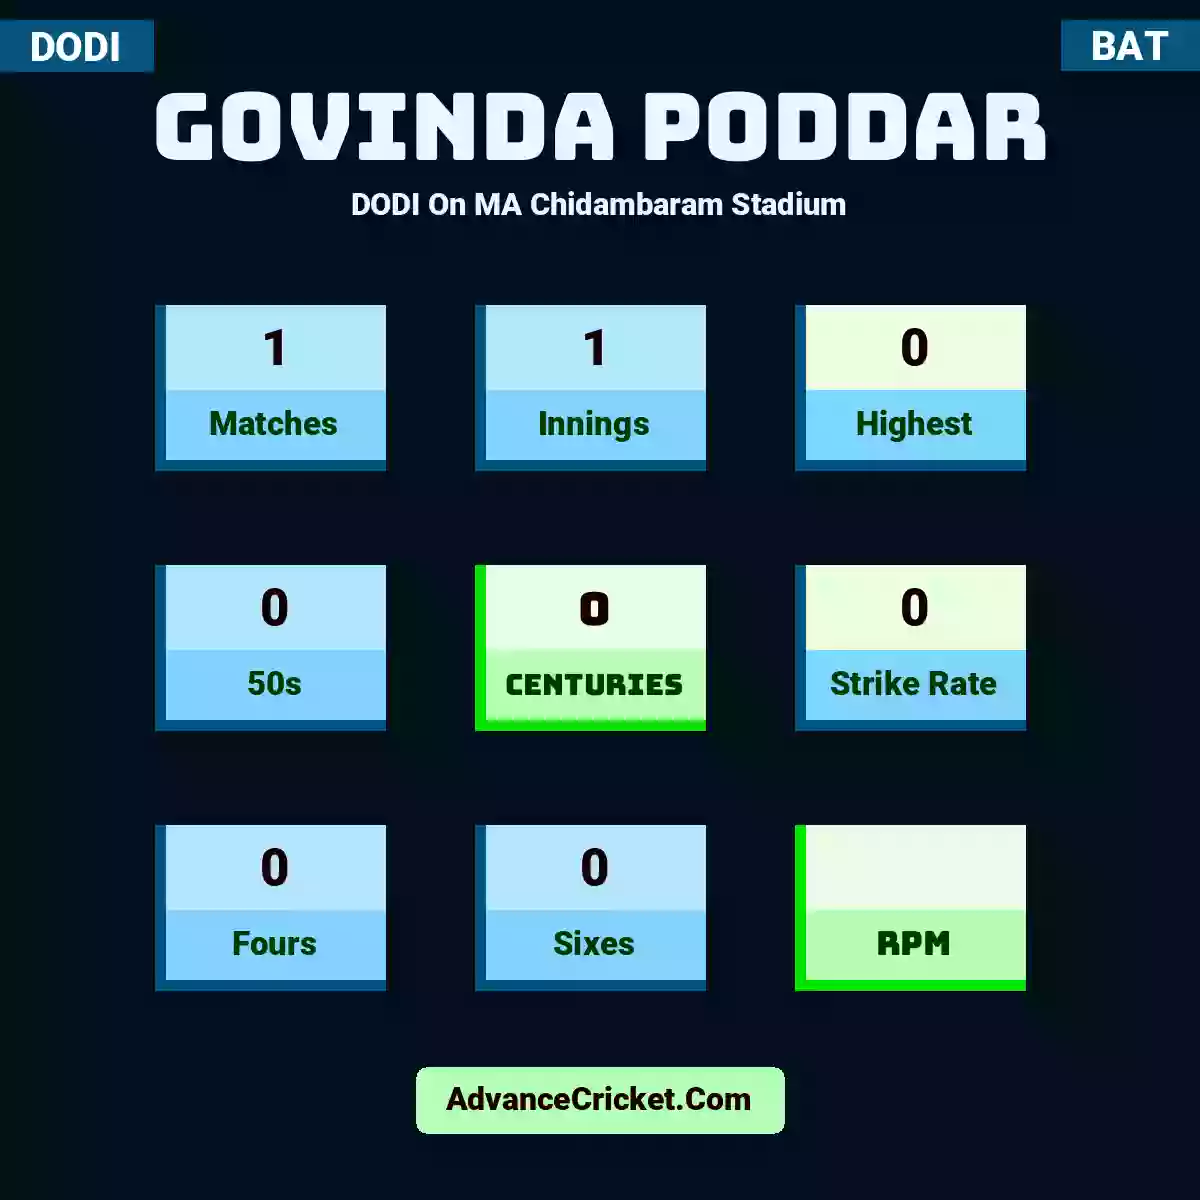 Govinda Poddar DODI  On MA Chidambaram Stadium, Govinda Poddar played 1 matches, scored 0 runs as highest, 0 half-centuries, and 0 centuries, with a strike rate of 0. G.Poddar hit 0 fours and 0 sixes.